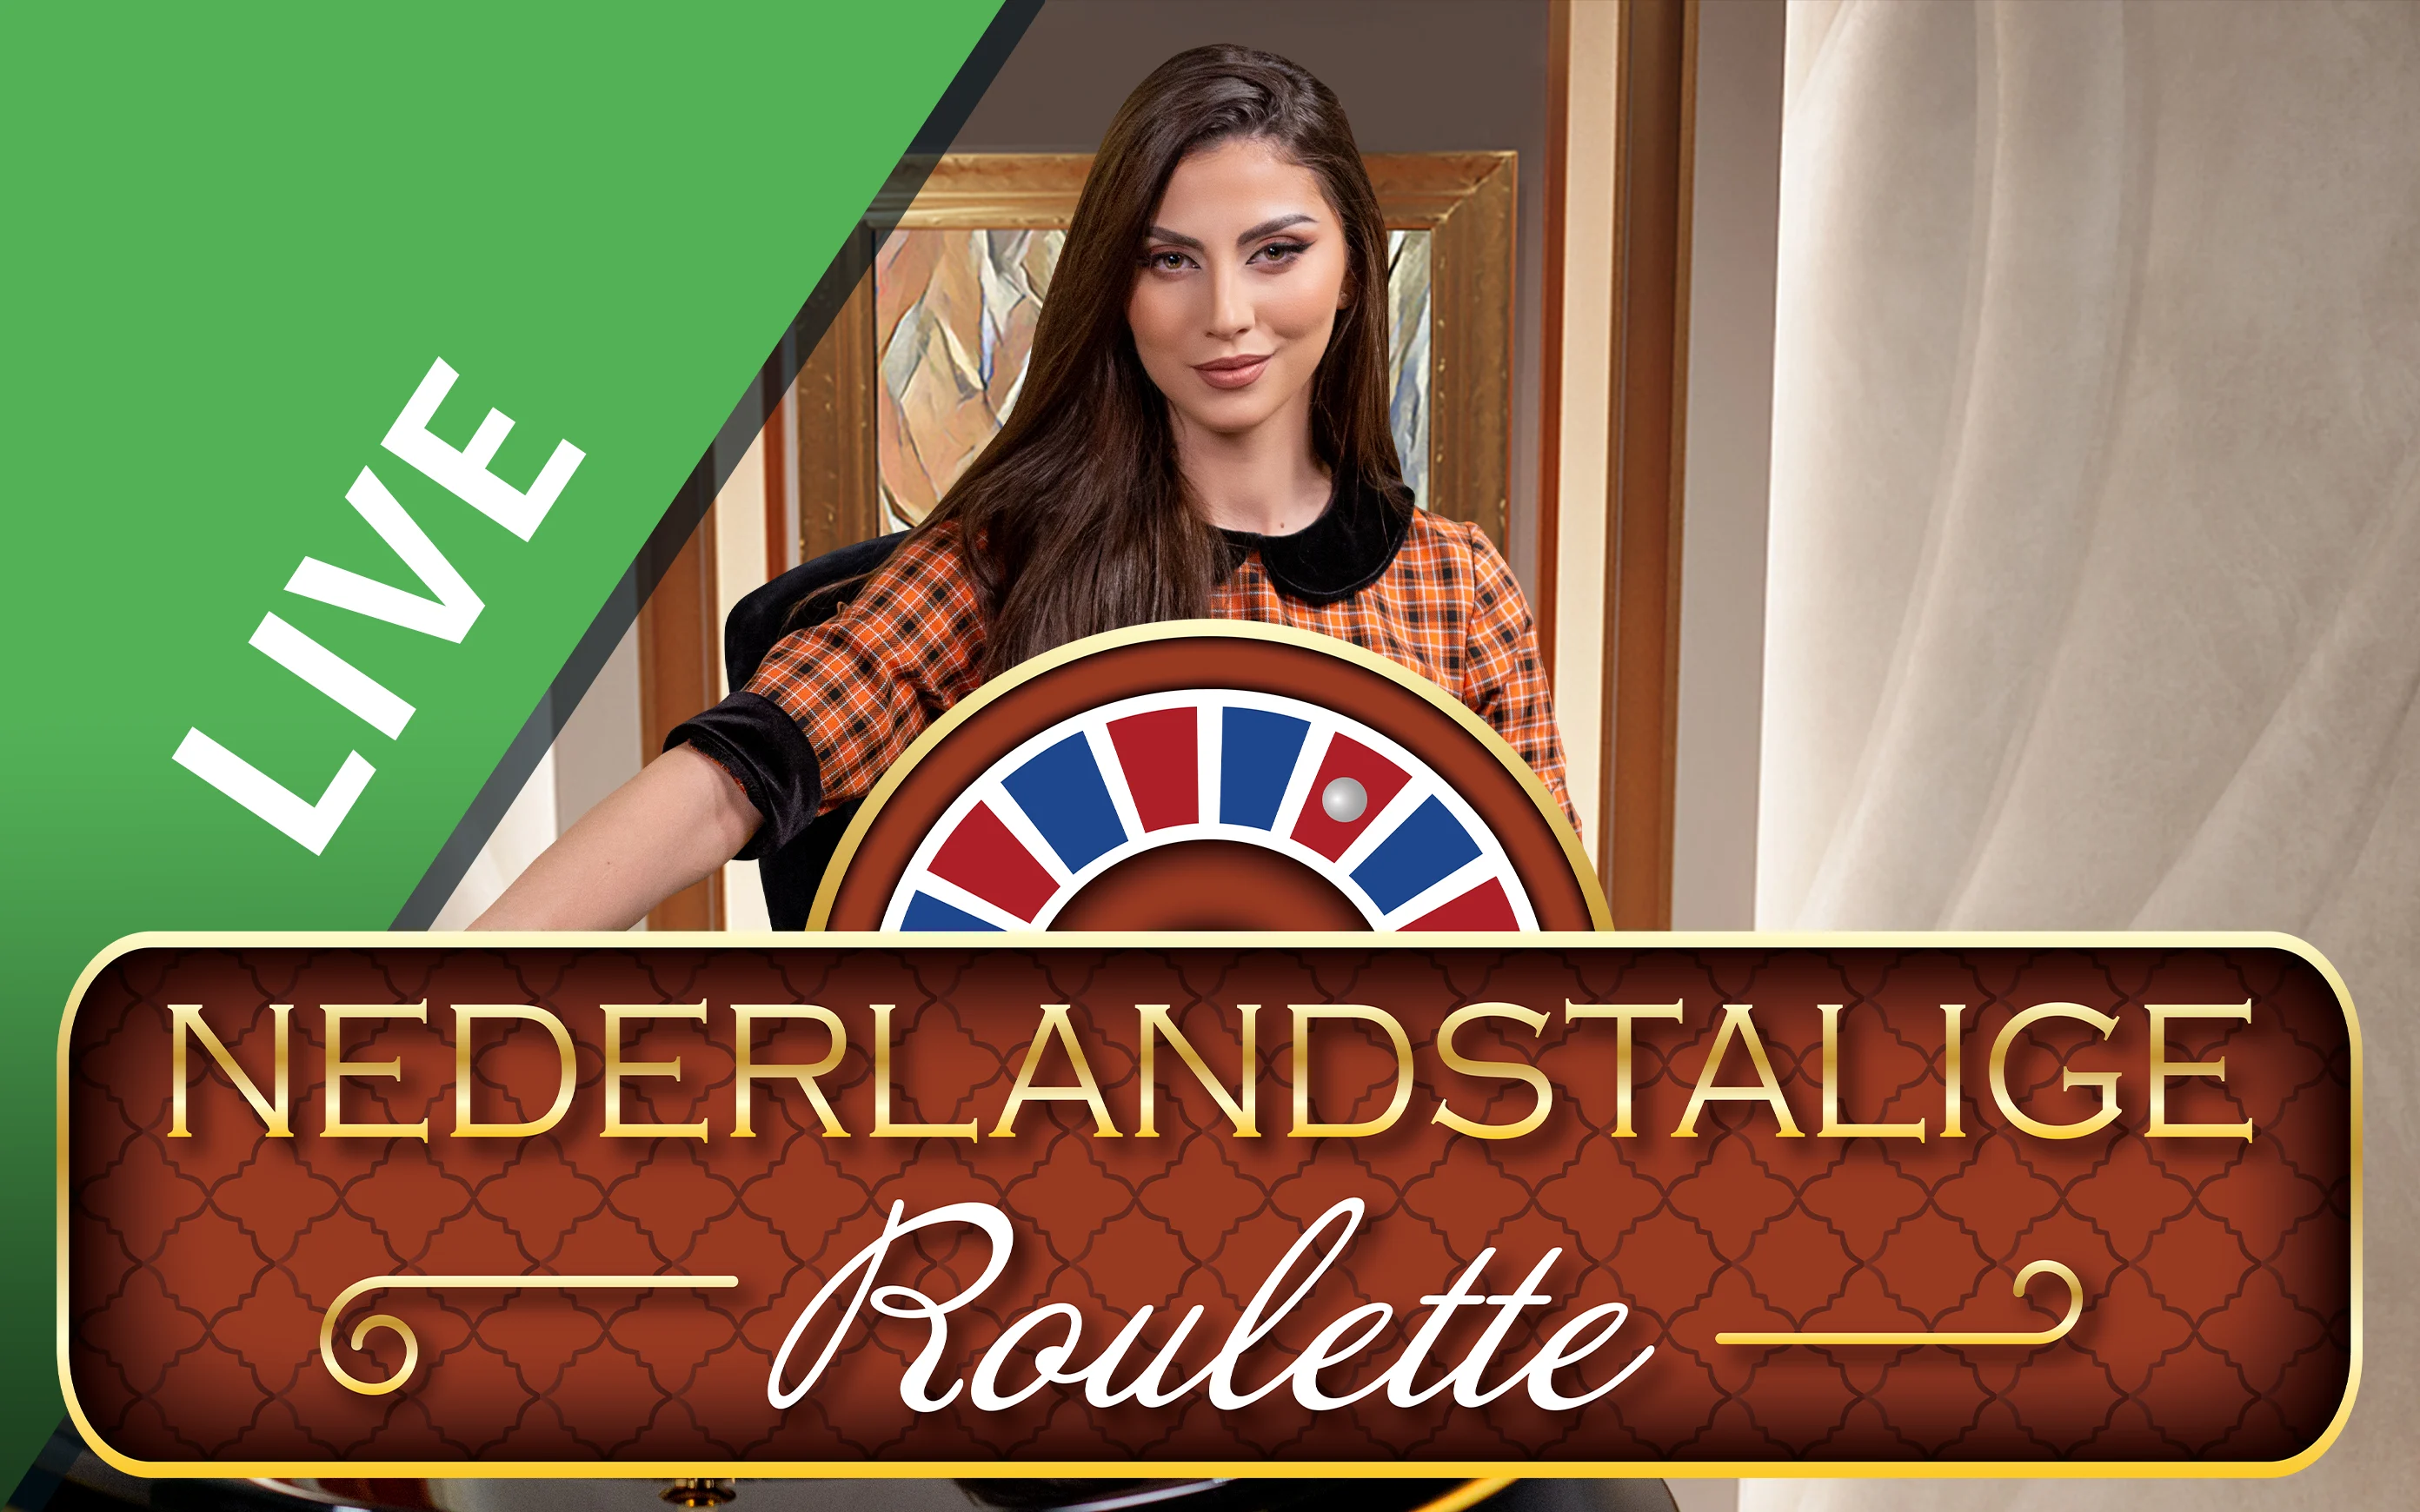 Spil Nederlandstalige Roulette på Starcasino.be online kasino
